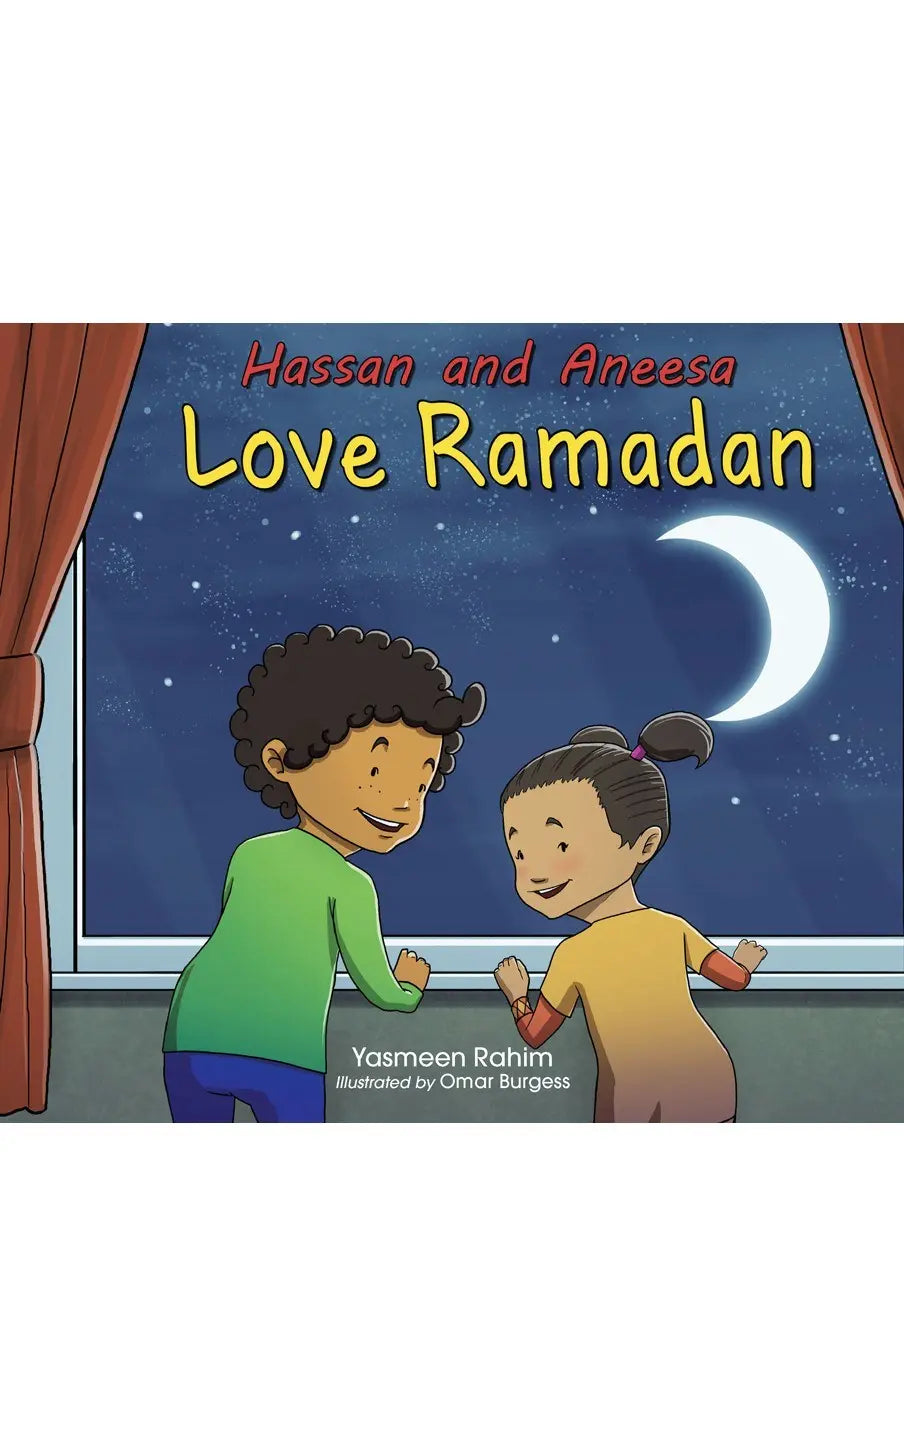 Hassan and Aneesa: Love Ramadan